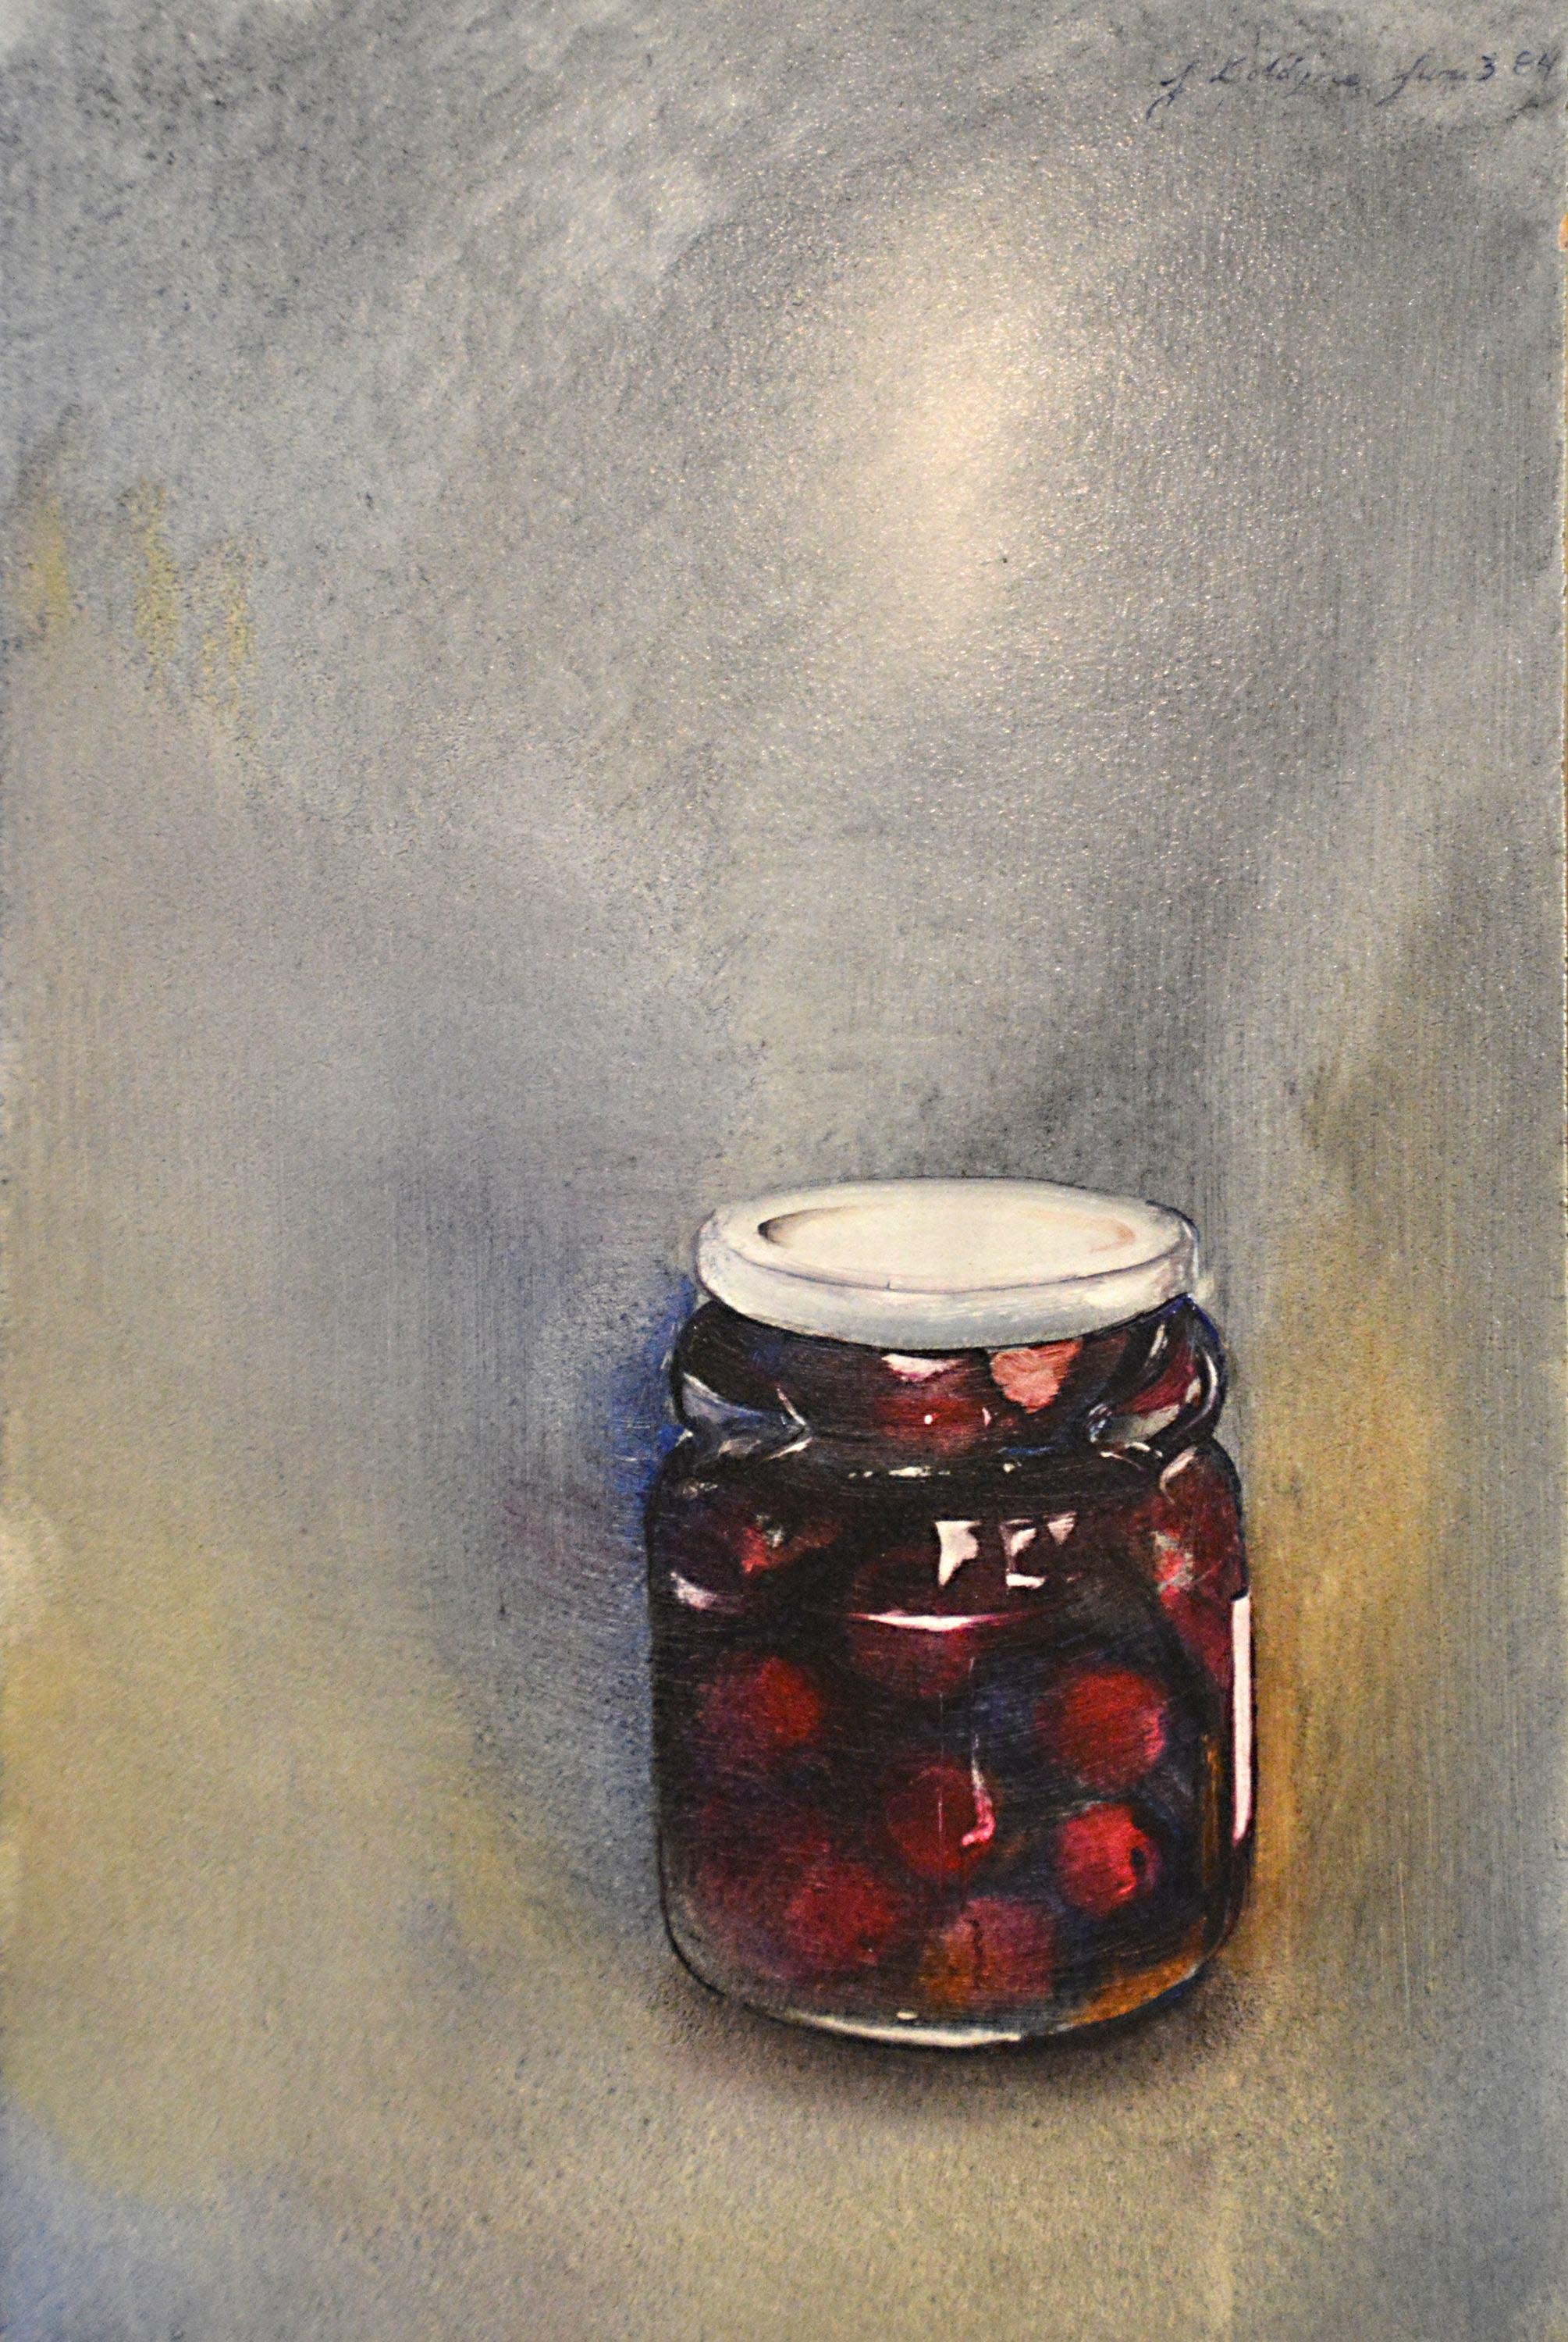 "Cherry Jar," 1984, Oil on panel, by Joseph Goldyne at Sonoma Valley Museum of Art through December 1, 2013. Courtesy of the artist.